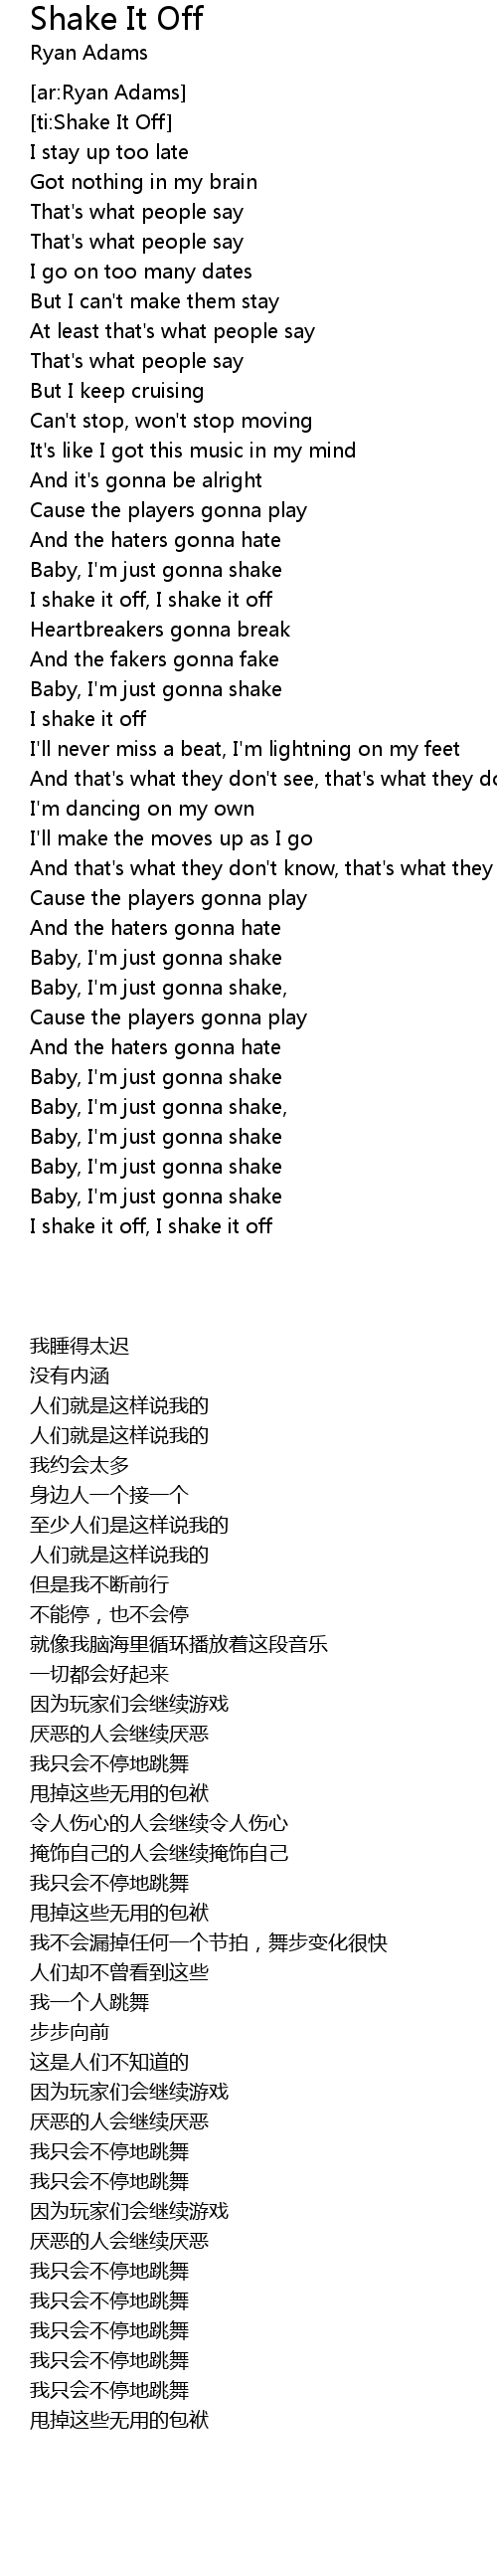 Shake it off lyrics